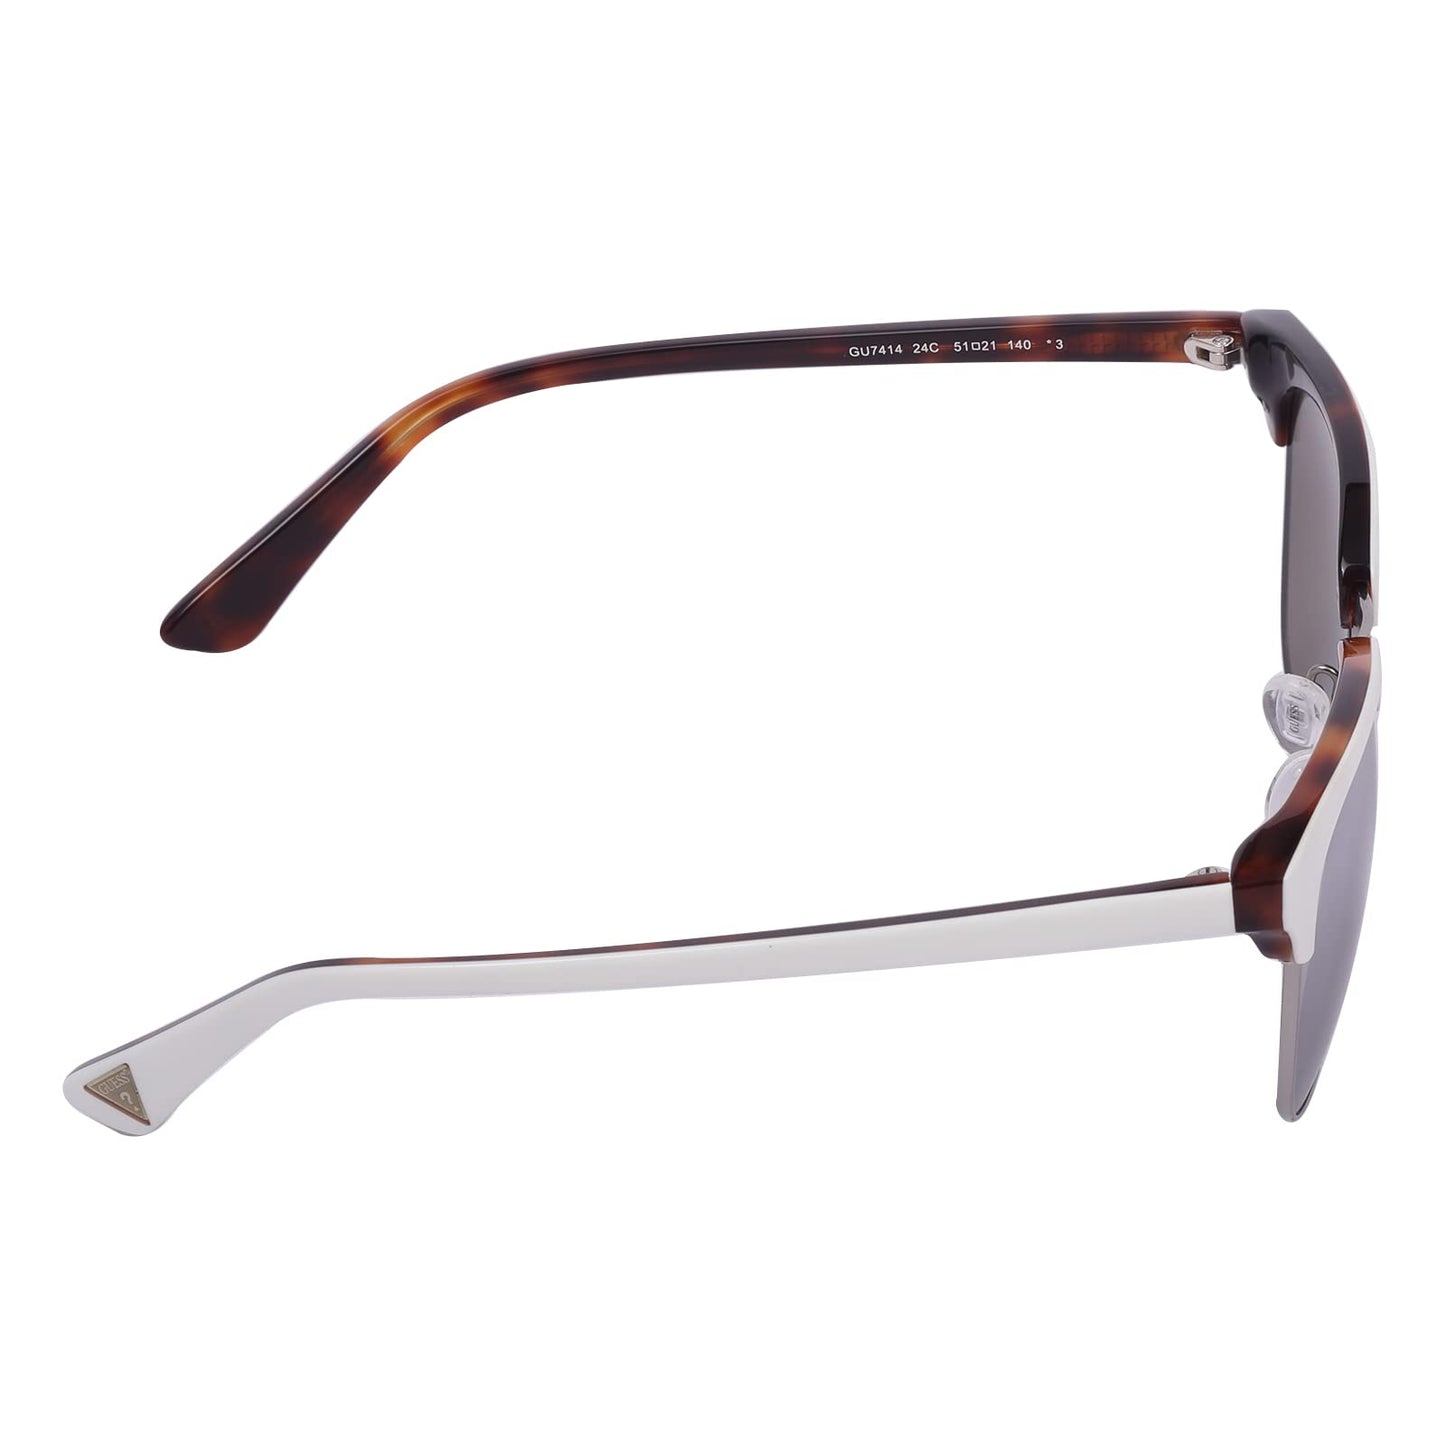 GUESS Gradient Browline/Clubmaster Unisex Sunglasses 7414 24C|51|Silver Color Lens